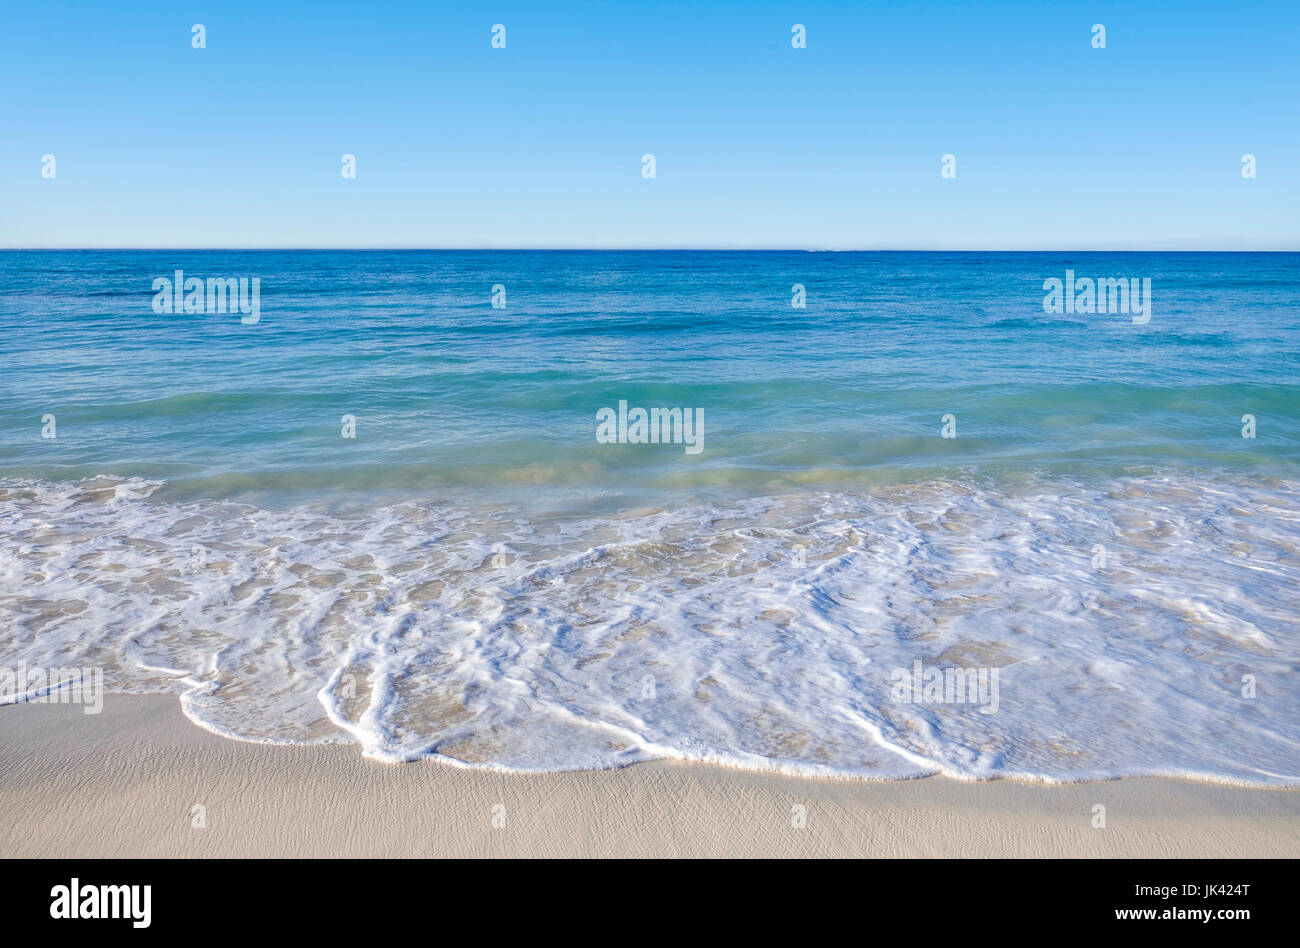 Ocean waves on beach Stock Photo